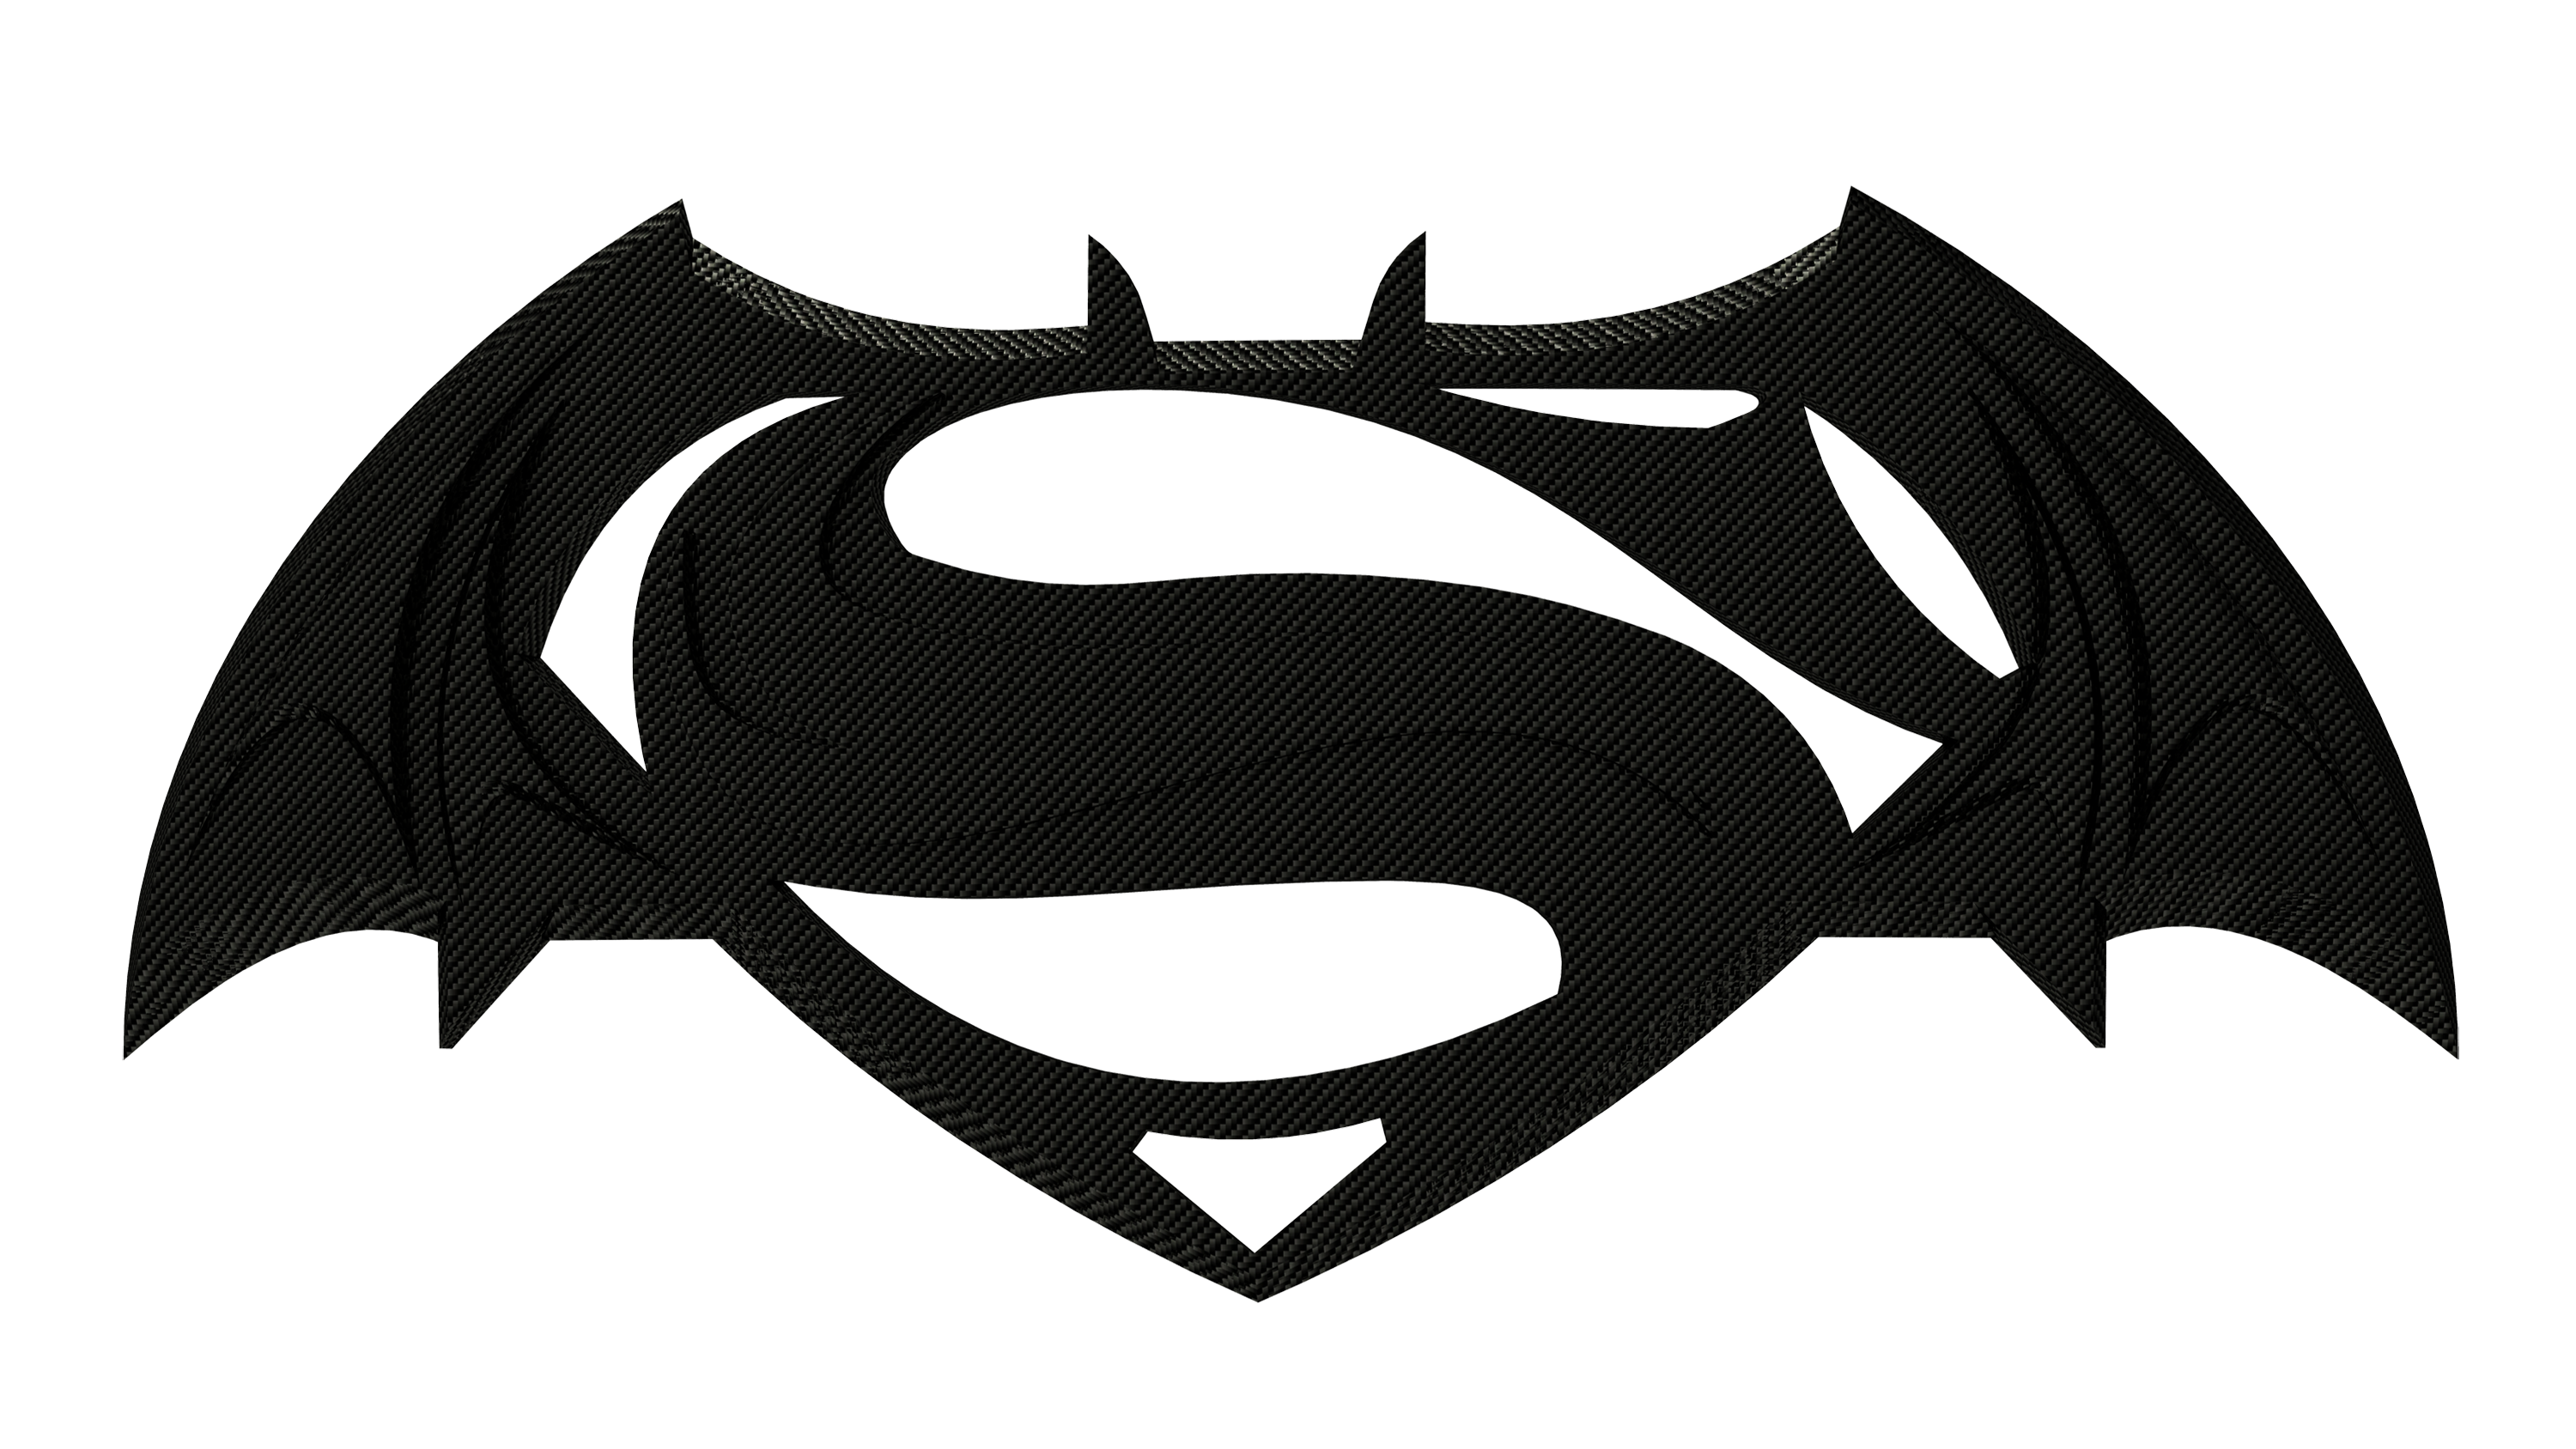 Batman Vs Superman 01 by llexandro on Clipart library